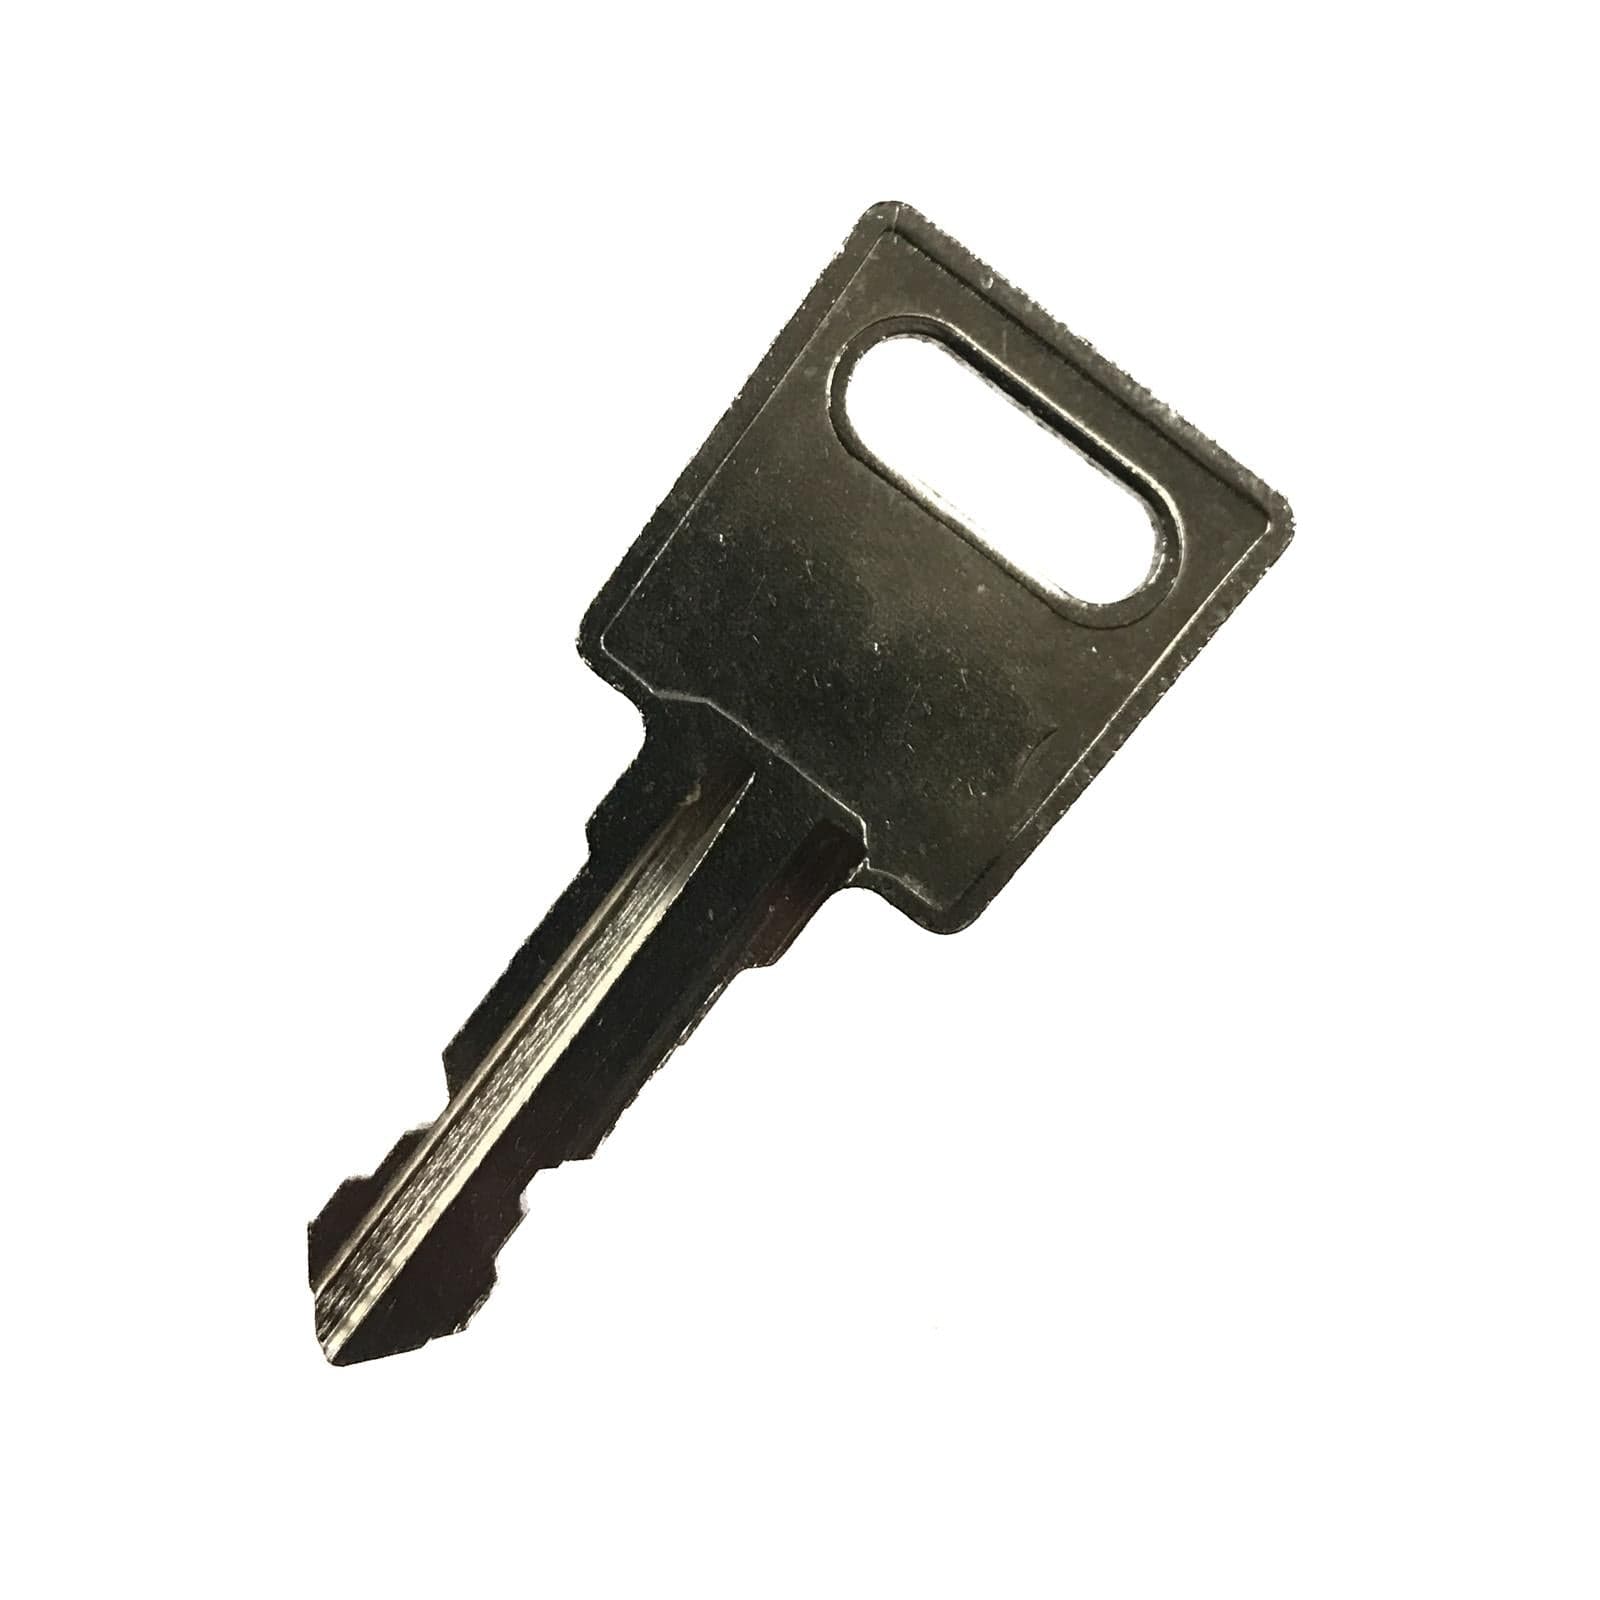 Replacement Window Key FH002 to Suit Everest Window Locks Pre Cut Service Item Thunderfix 902409